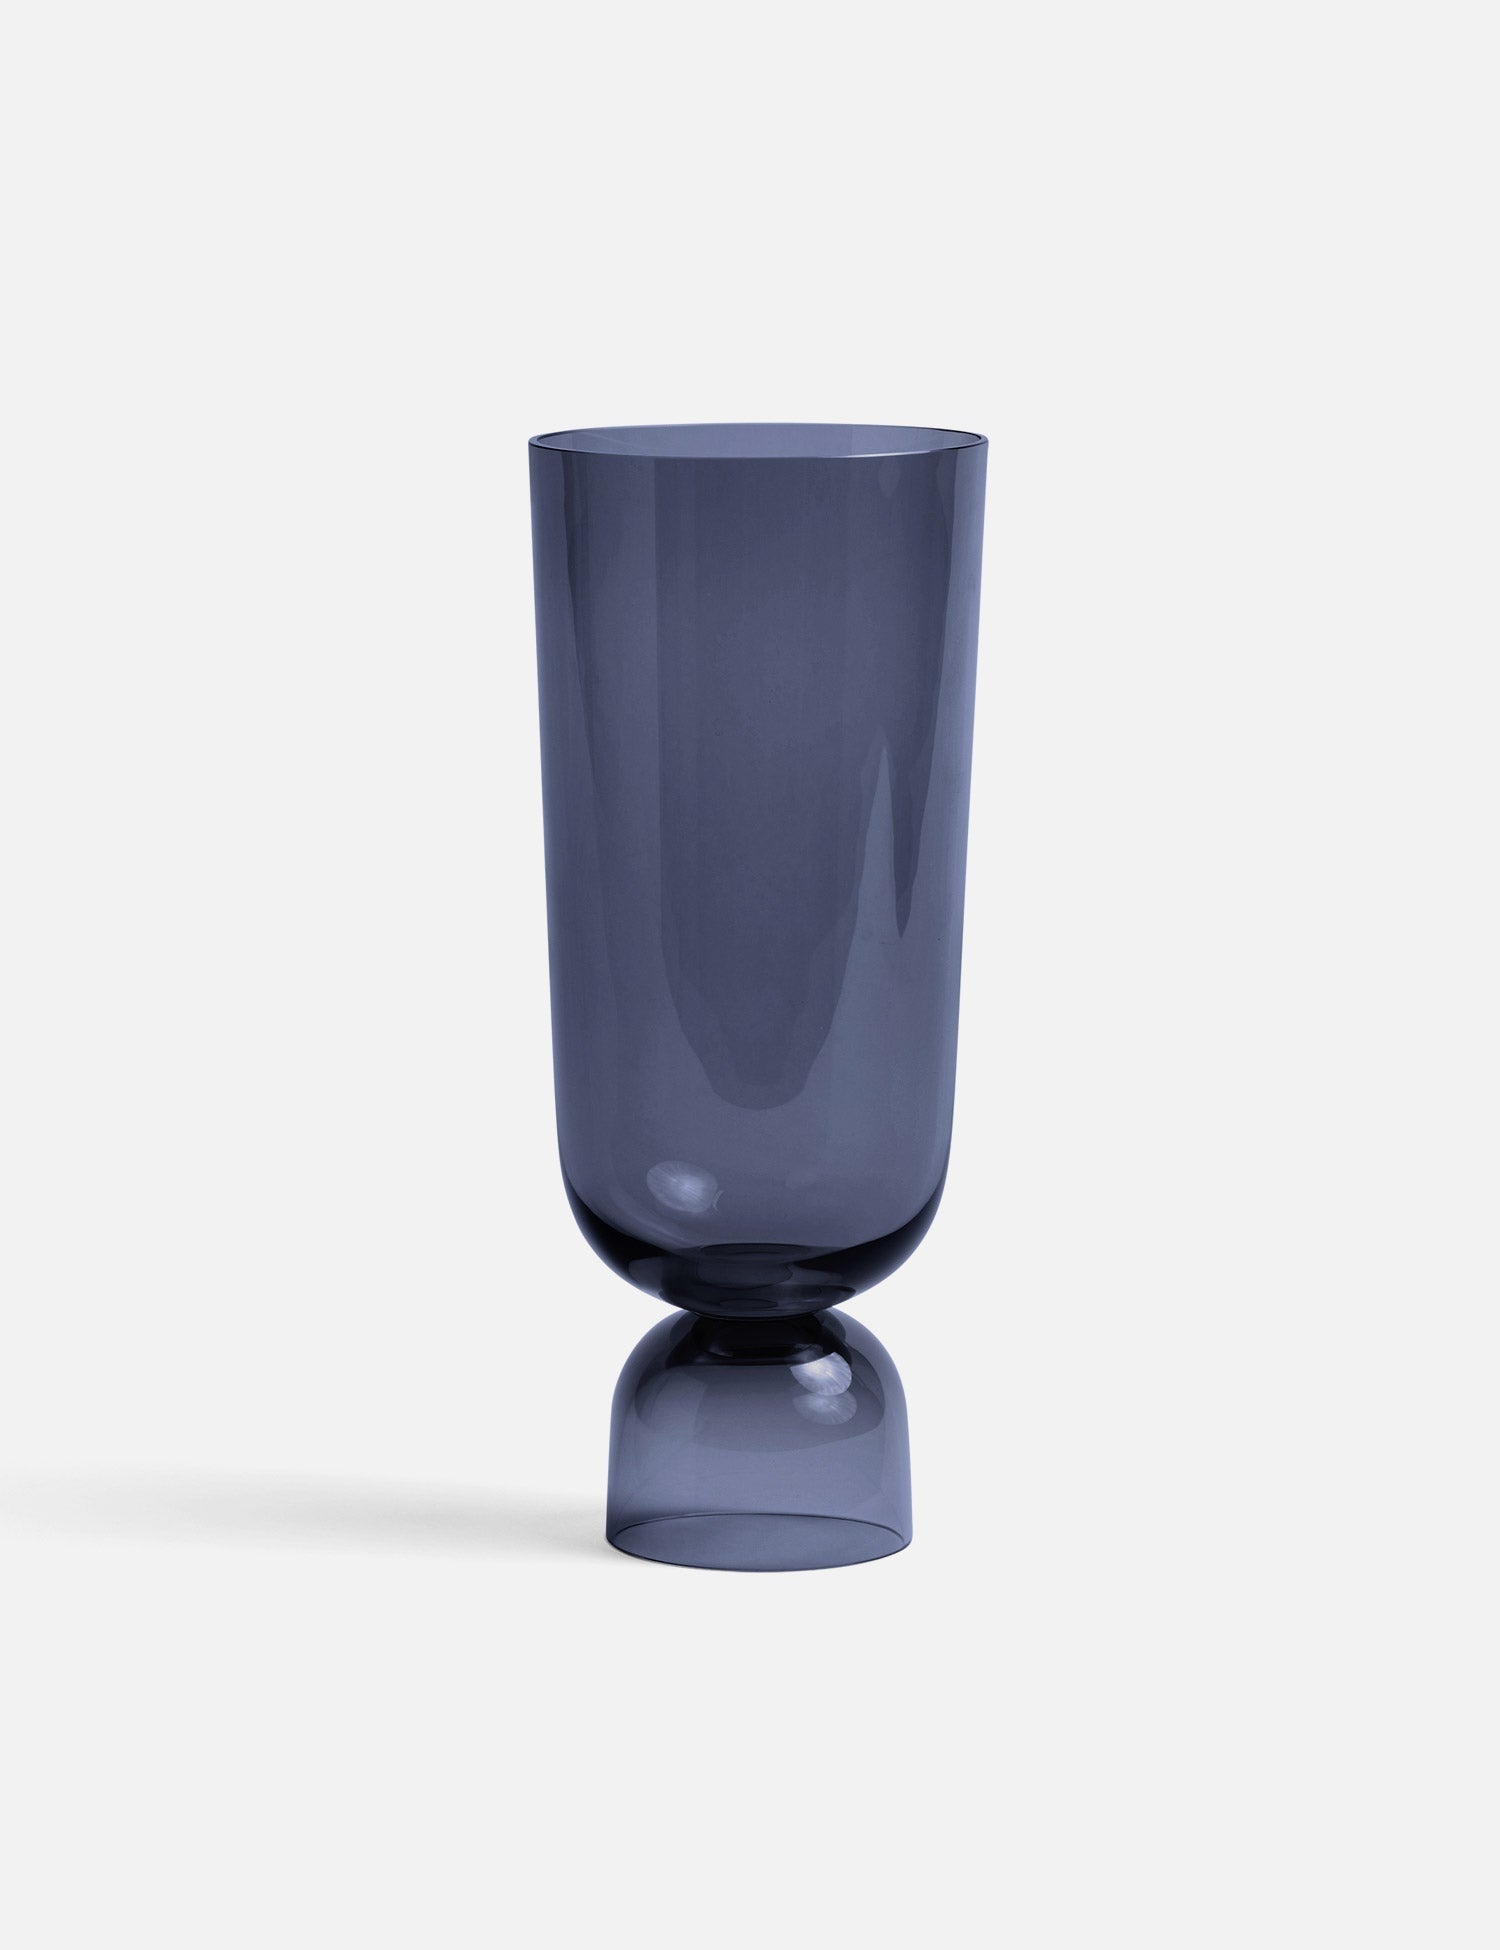 Bottoms Up Vase (Navy Blue)